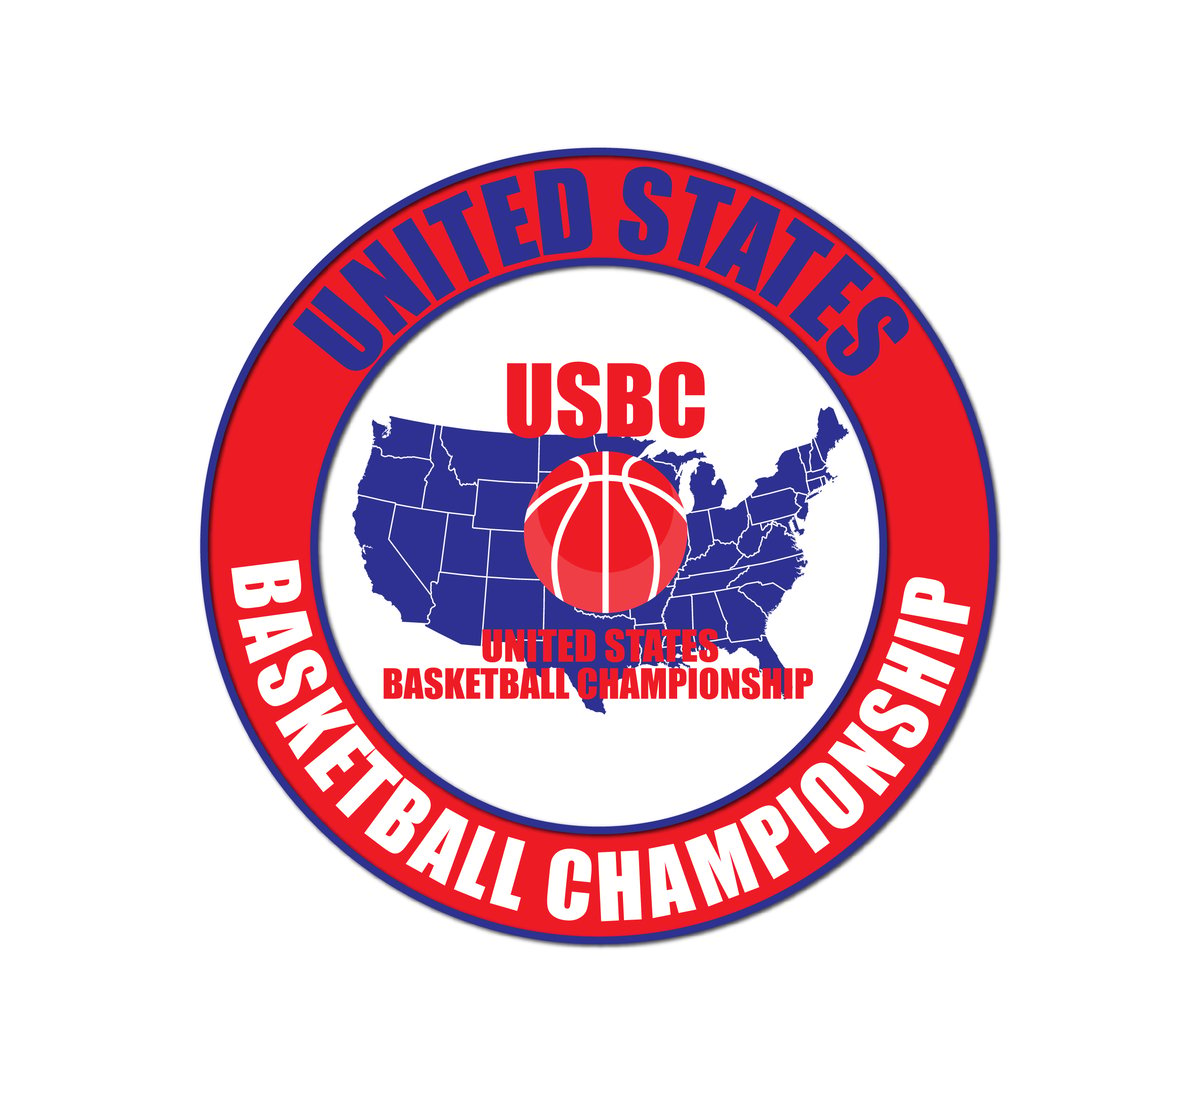 United States Basketball Network (USBN)